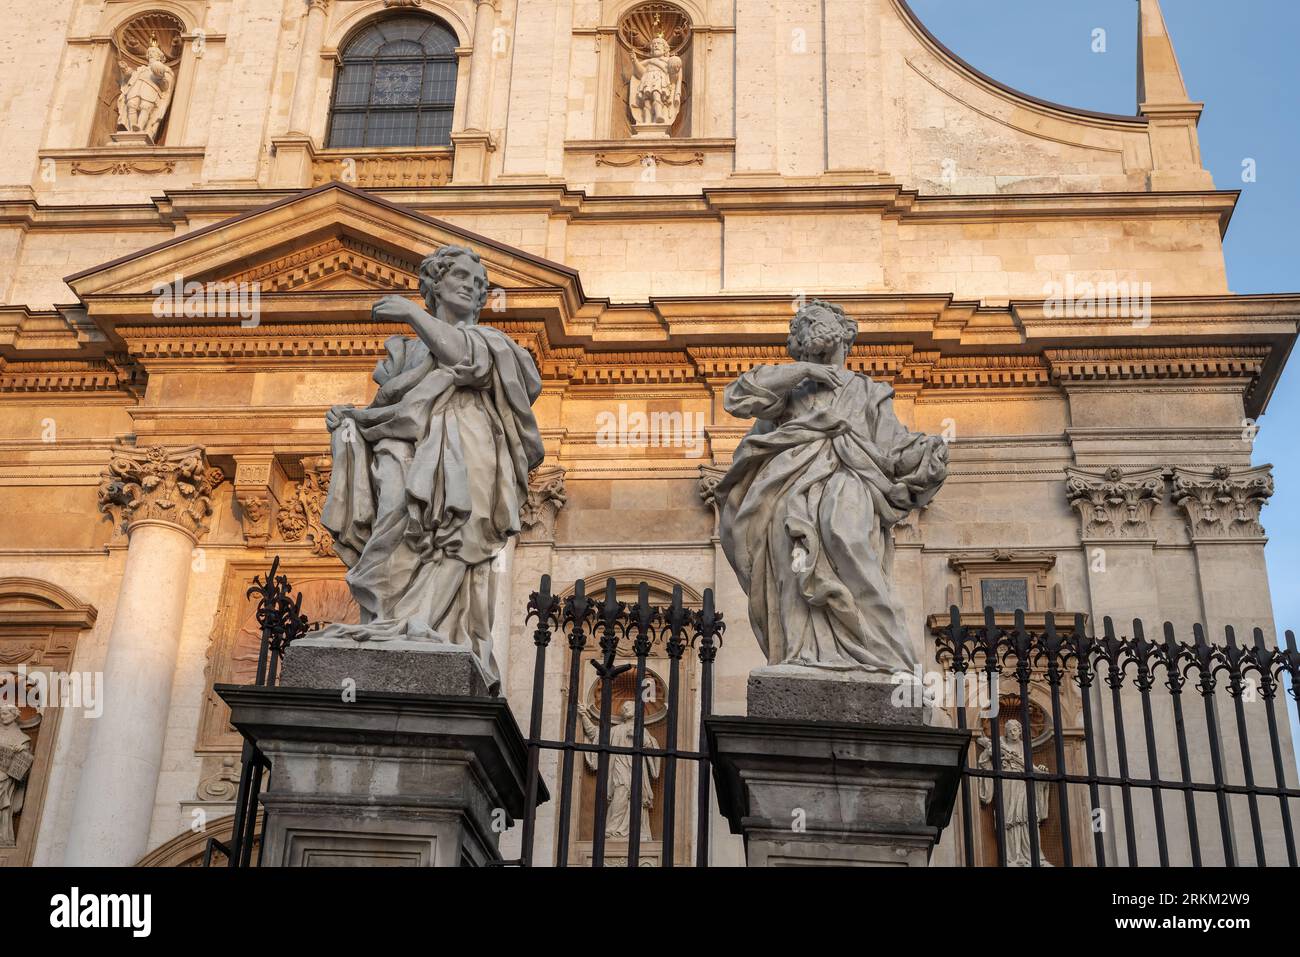 Twelve Apostles Statues in front of Saints Peter and Paul Church - St. Jude Thaddeus and St. Matthias - Krakow, Poland Stock Photo